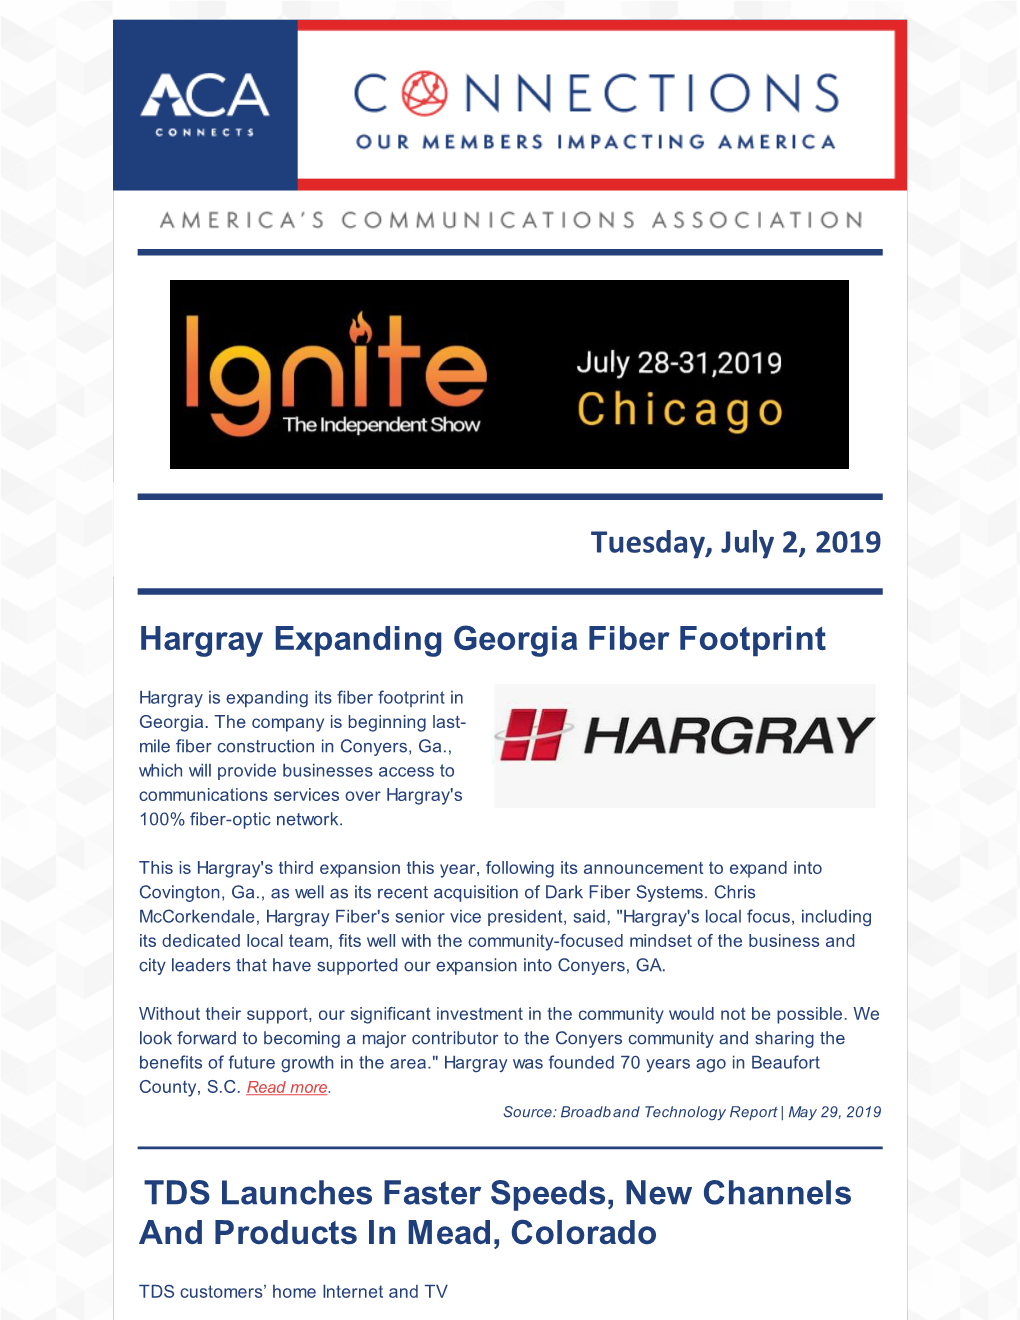 Tuesday, July 2, 2019 Hargray Expanding Georgia Fiber Footprint